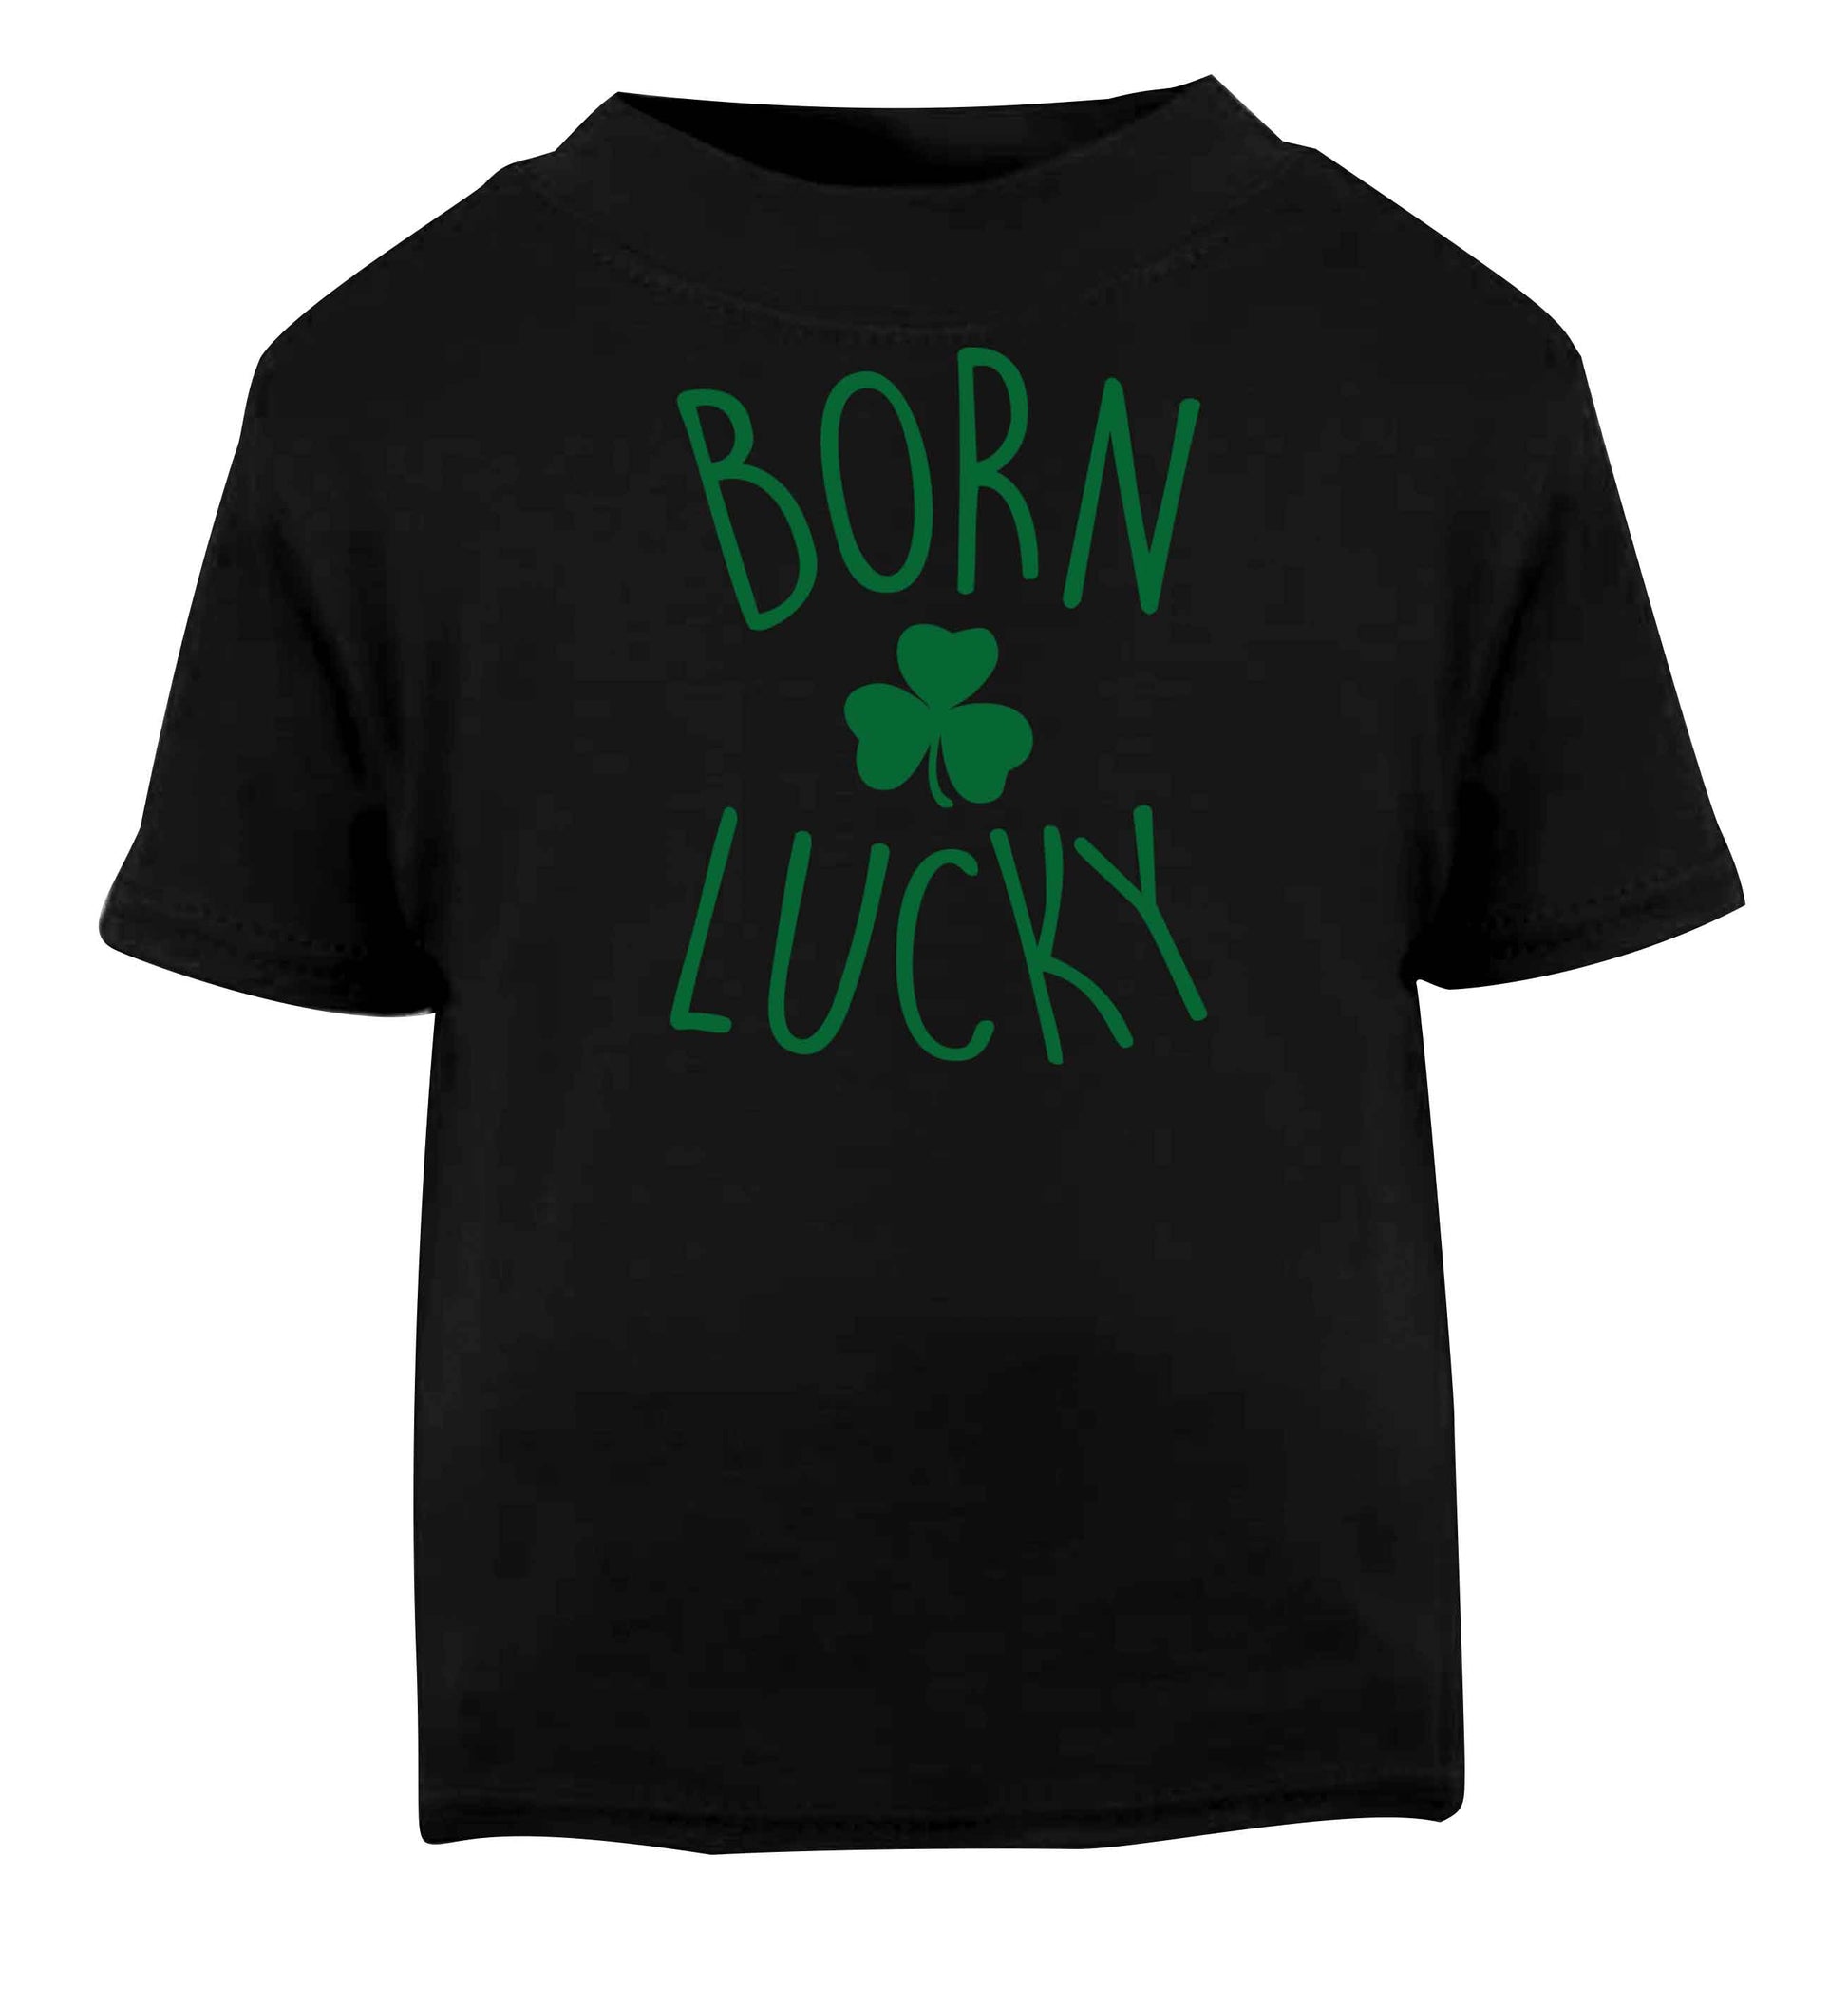 Born Lucky Black baby toddler Tshirt 2 years